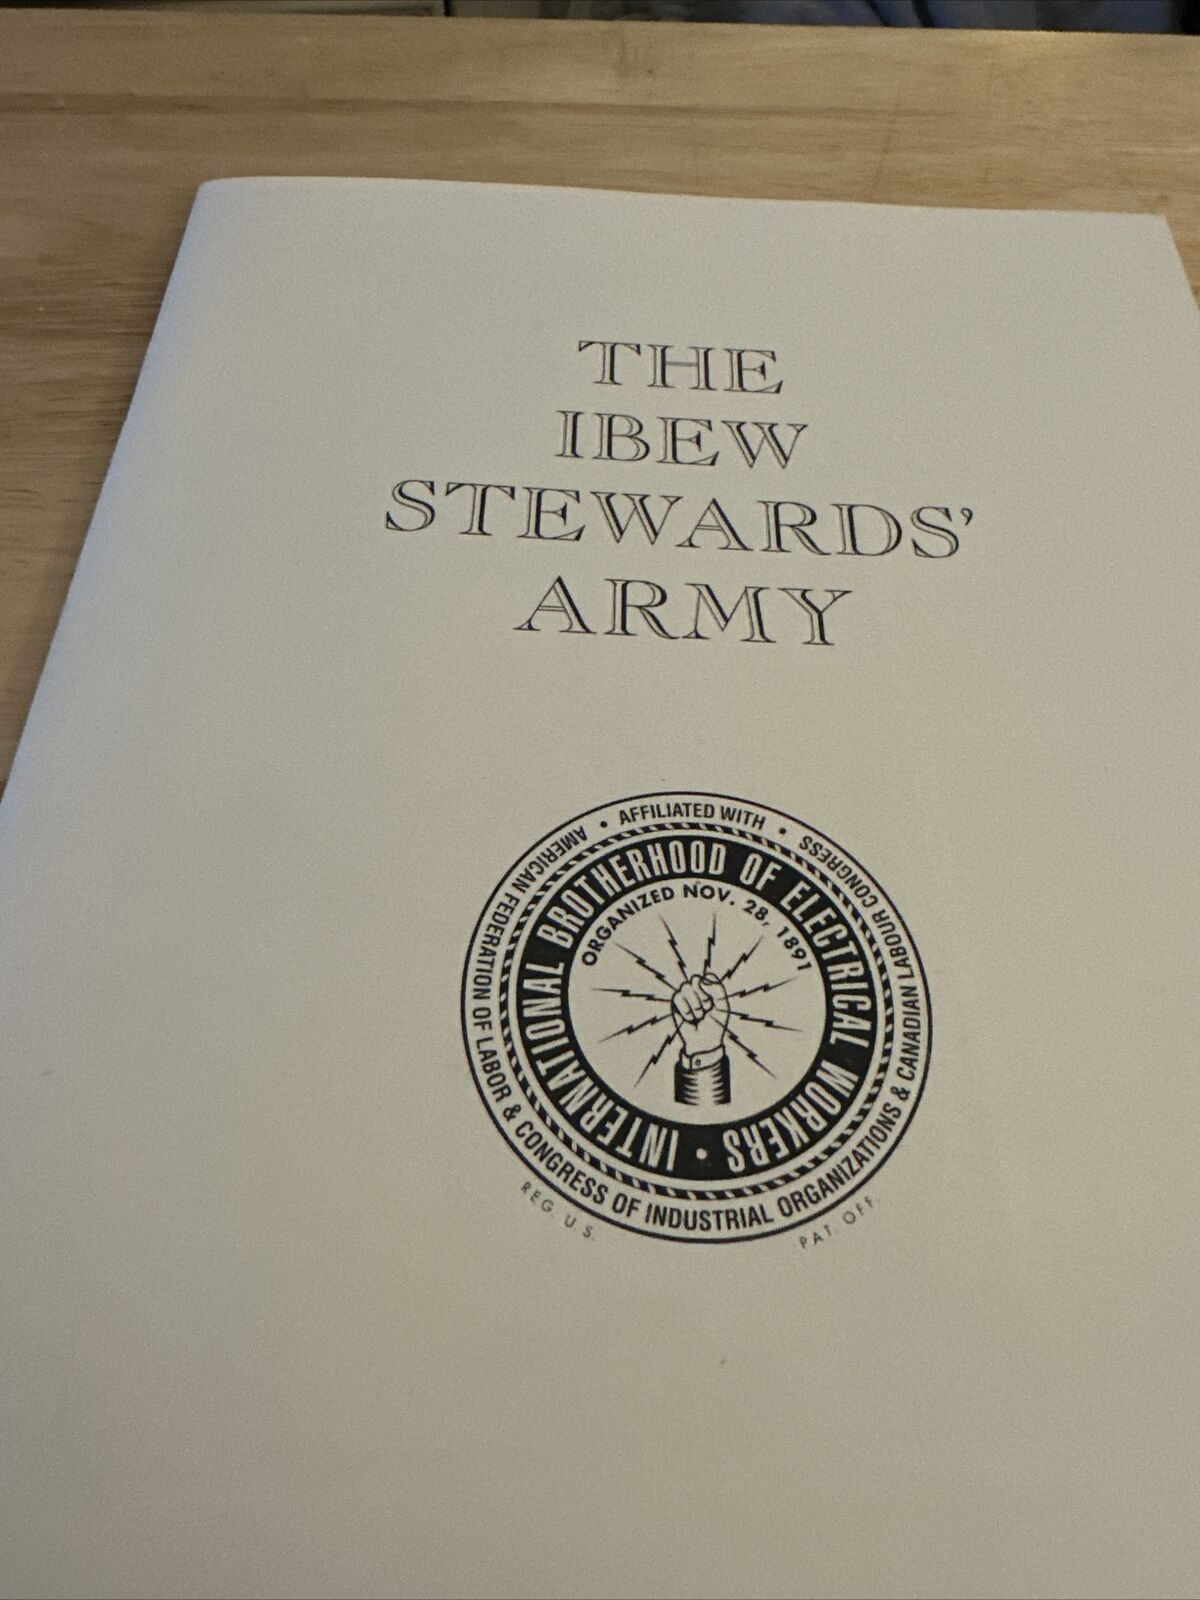 The IBEW Union Booklet Stewards Army